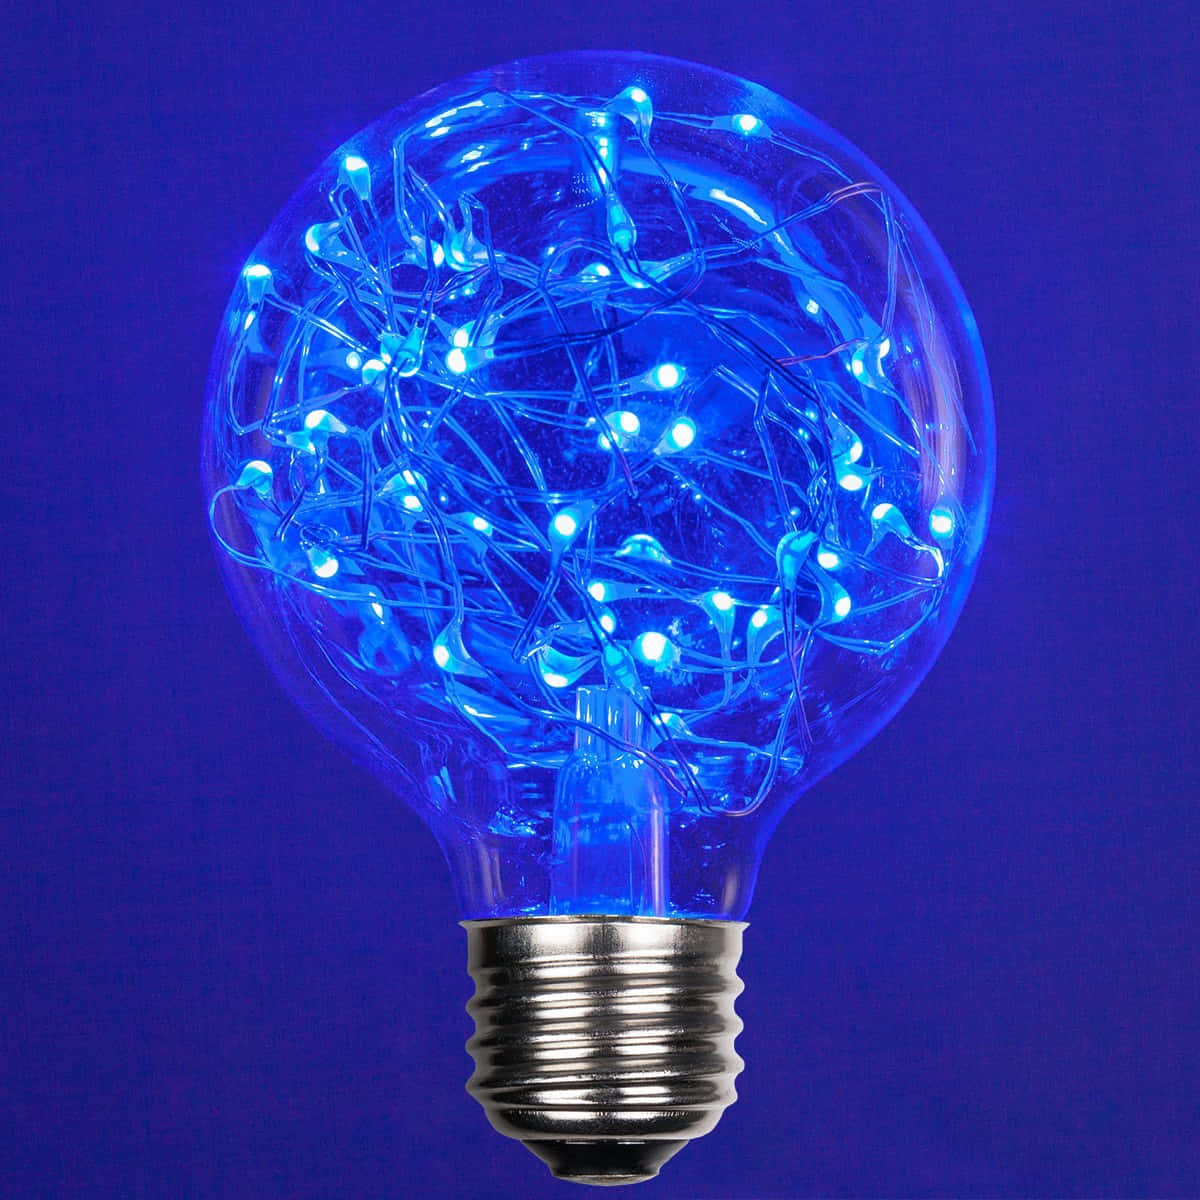 Blue Led Light Bulb With Blue Lights